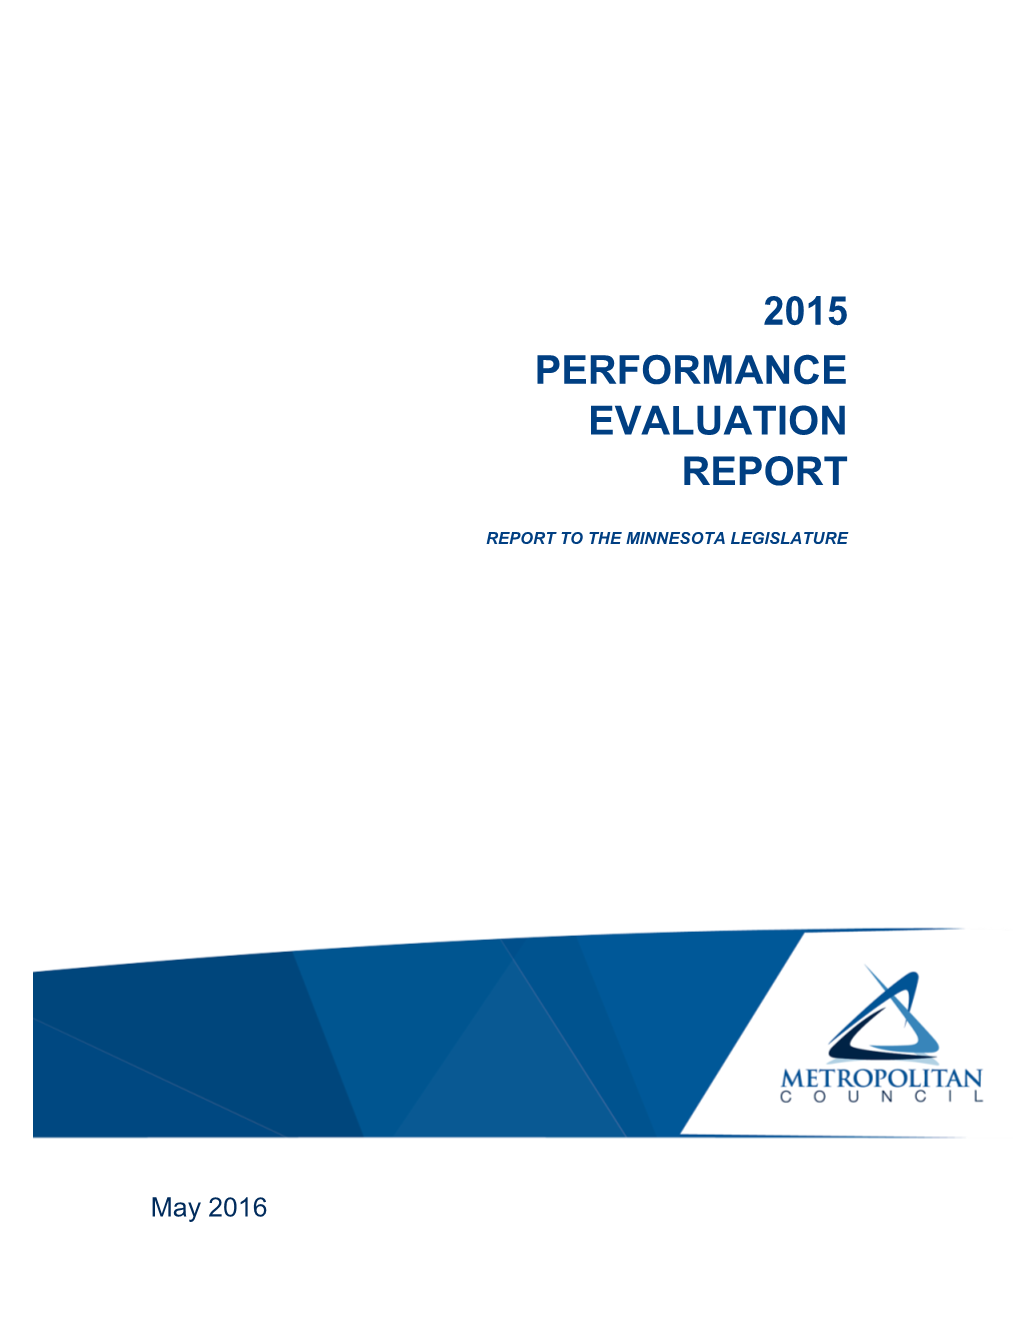 2015 Metropolitan Council Performance Evaluation Report